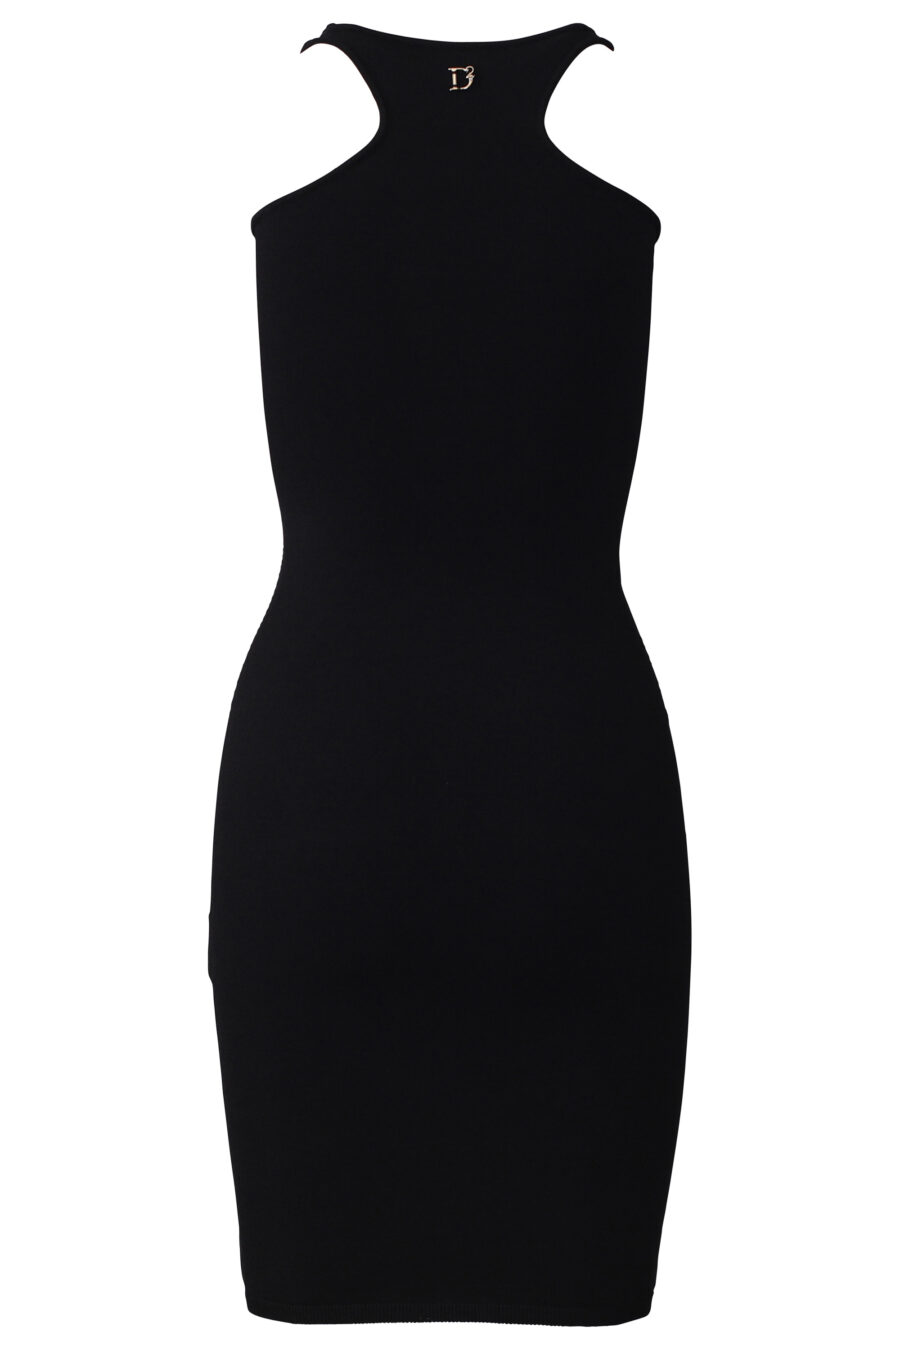 Black dress with slit - IMG 0573